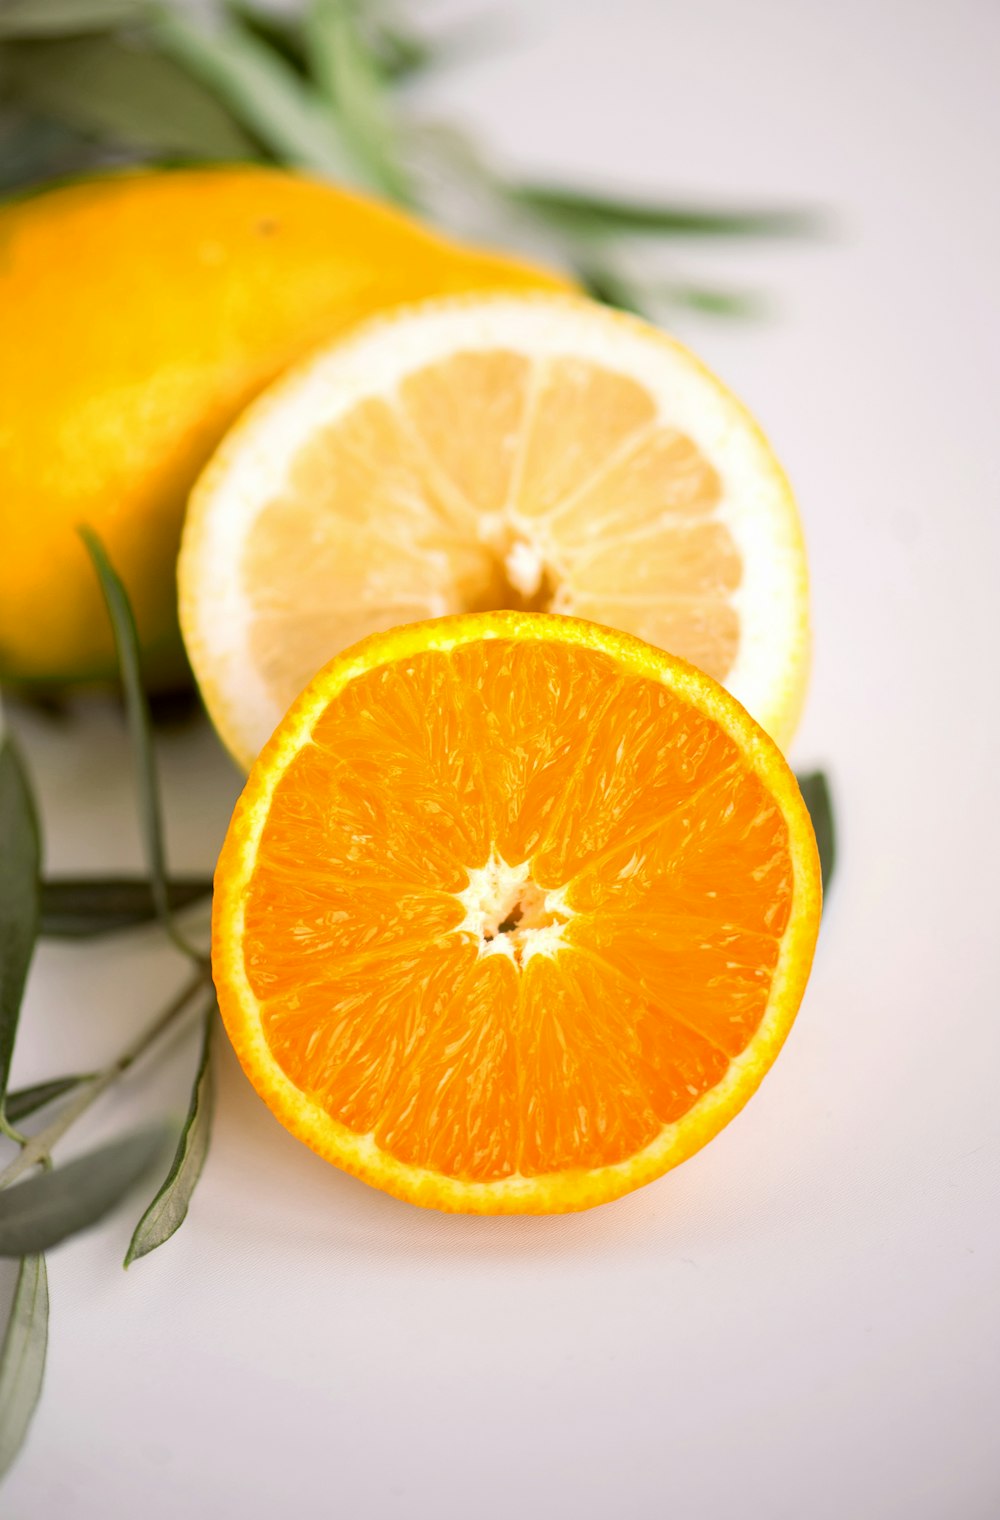 Orange Fruit Sliced Isolated On White Background Stock Photo, Picture and  Royalty Free Image. Image 35300340.